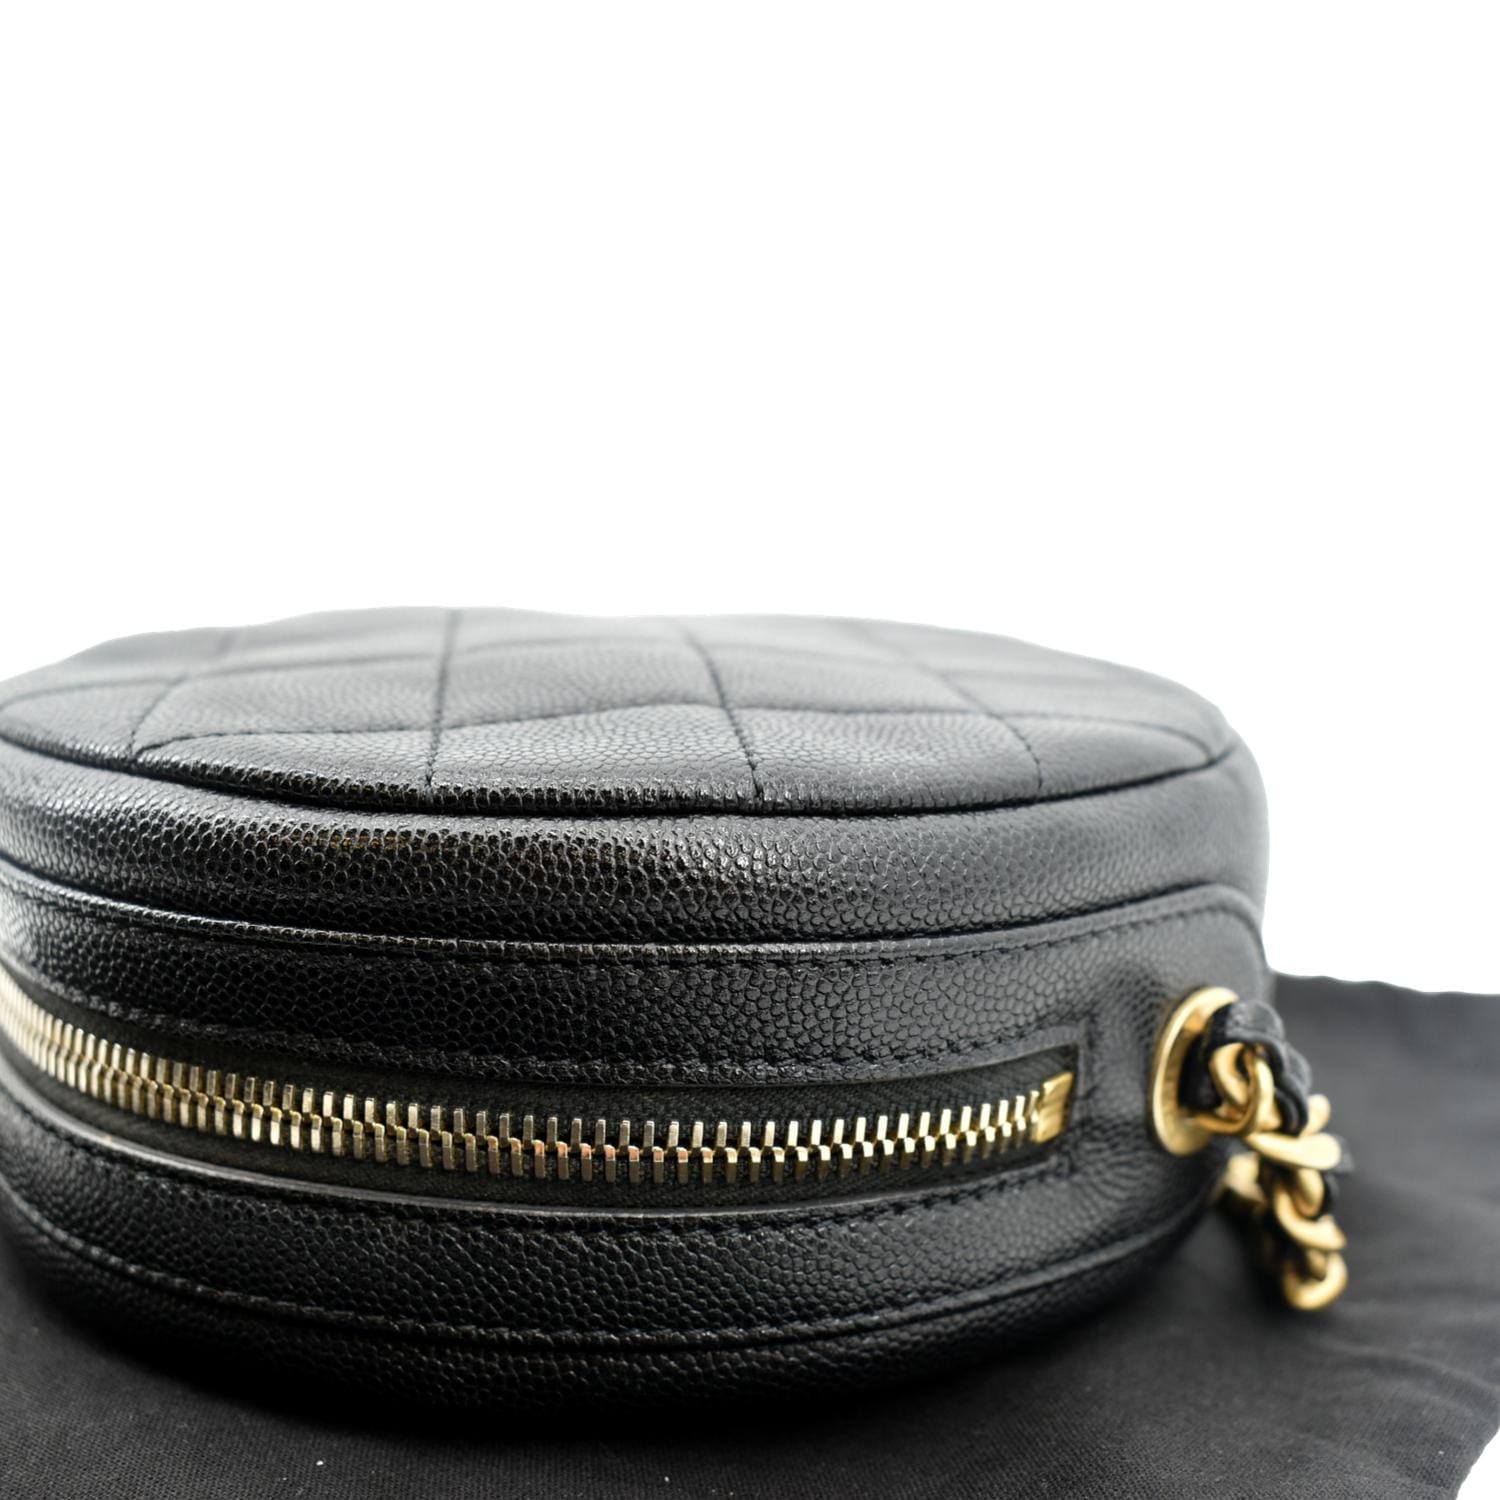 Chanel Black Caviar 3 Compartments Bag